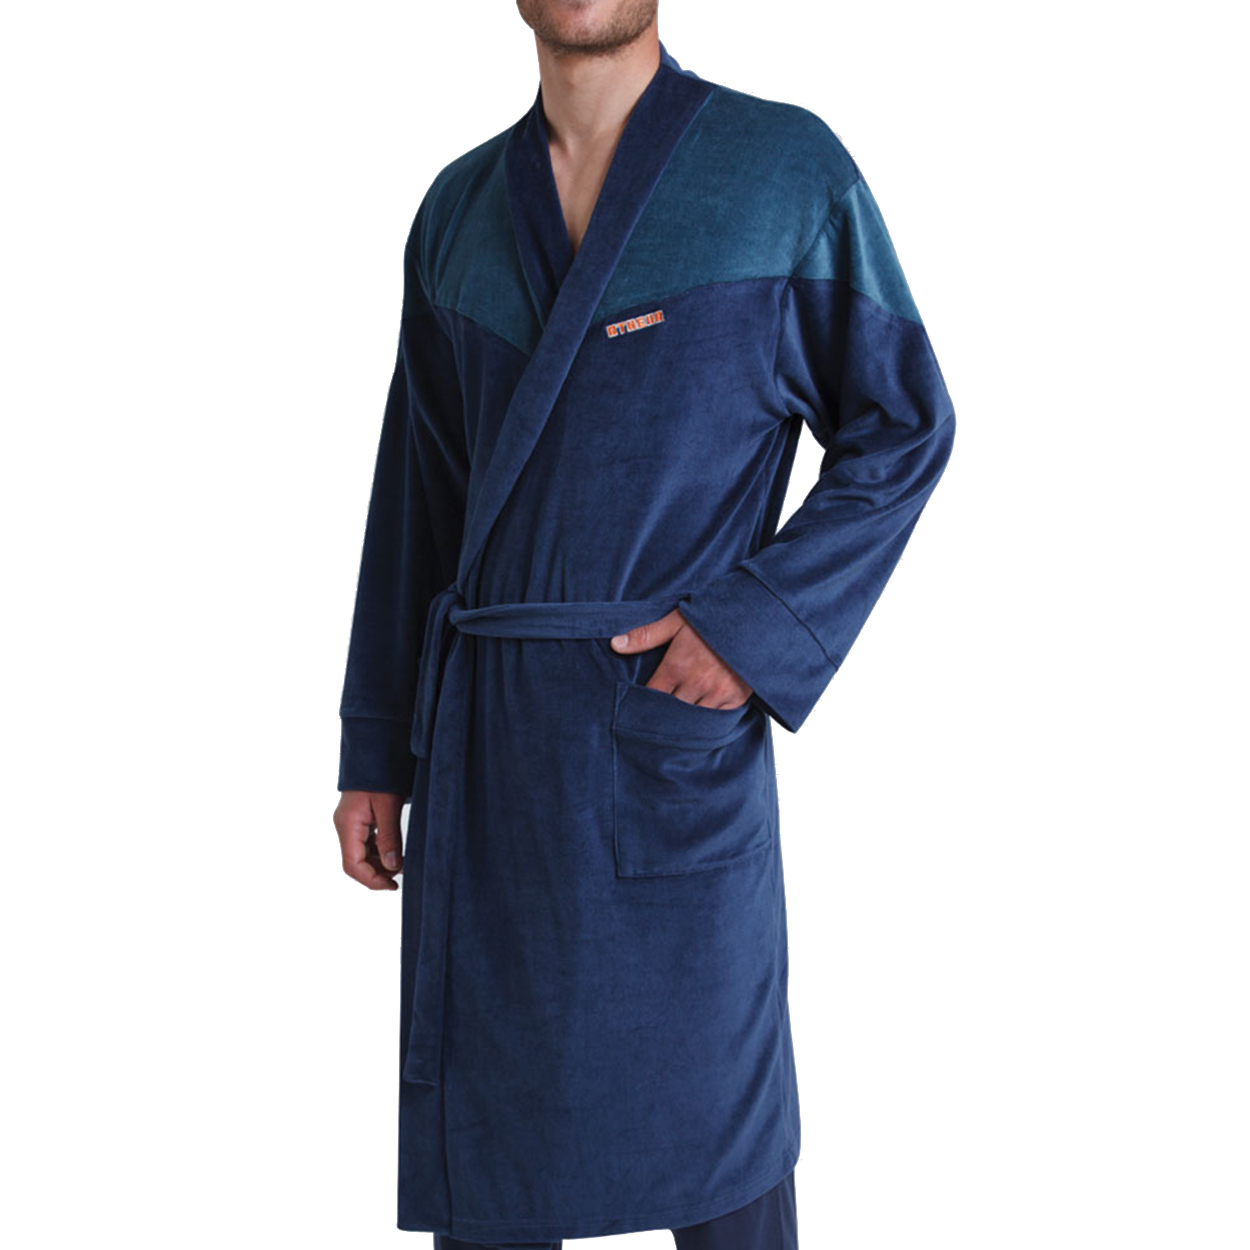 Robe de chambre velours Athena en coton mélangé bleu marine et bleu canard